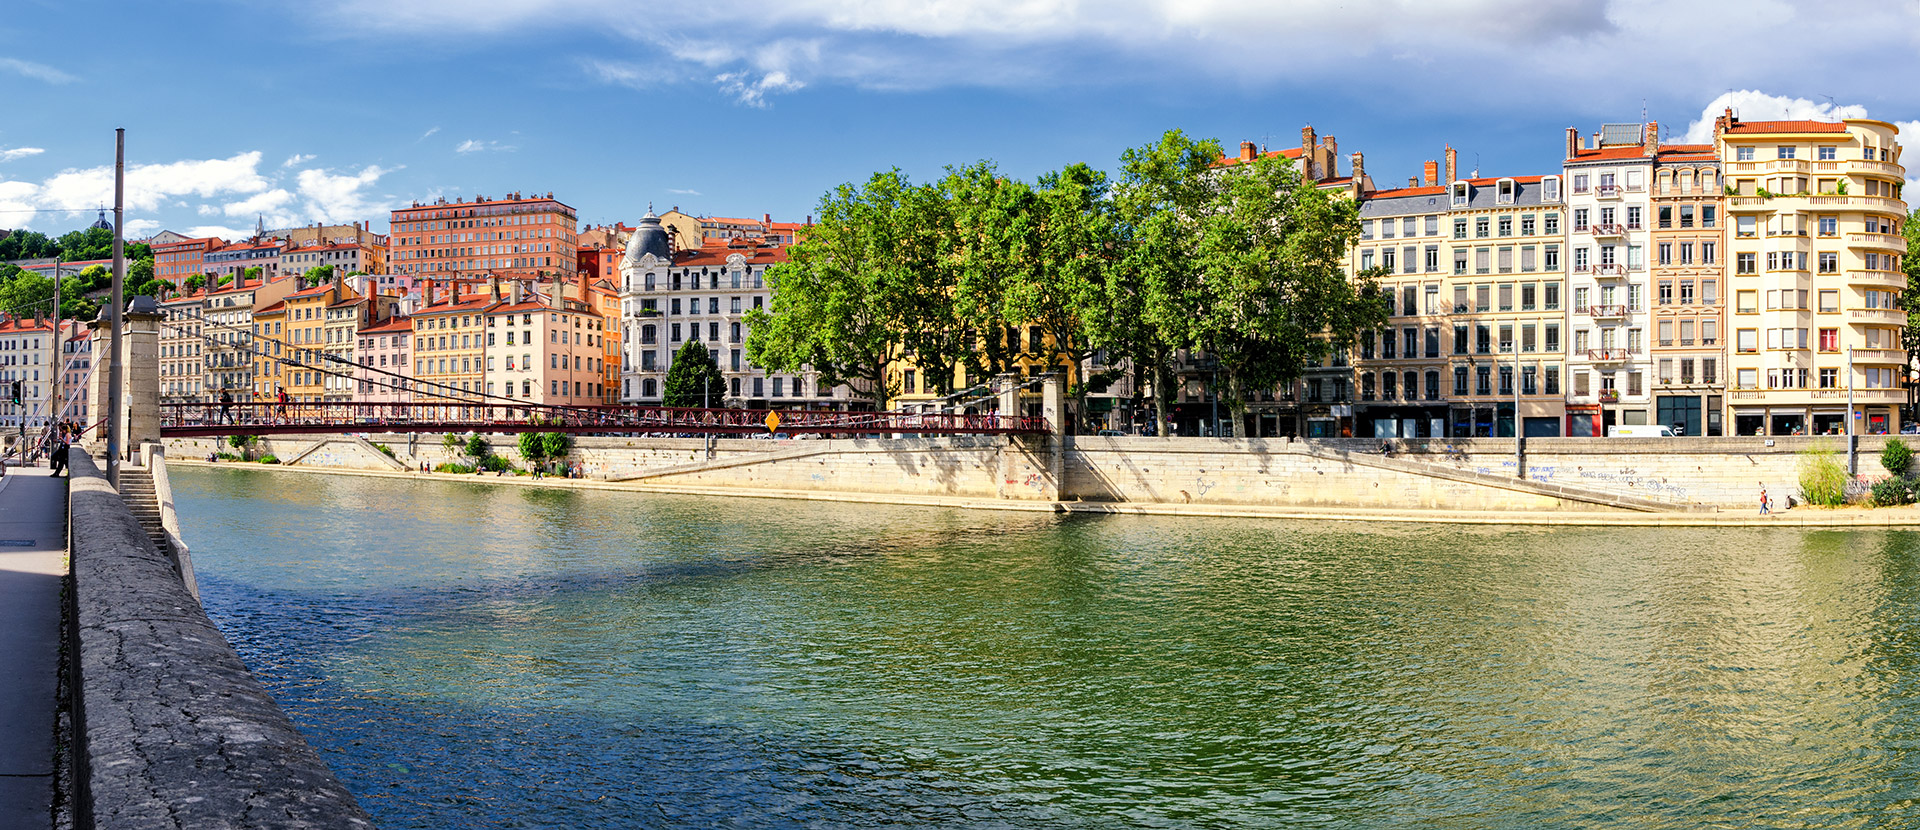 Les quais de Saône © Marco Sarracco / Shutterstock